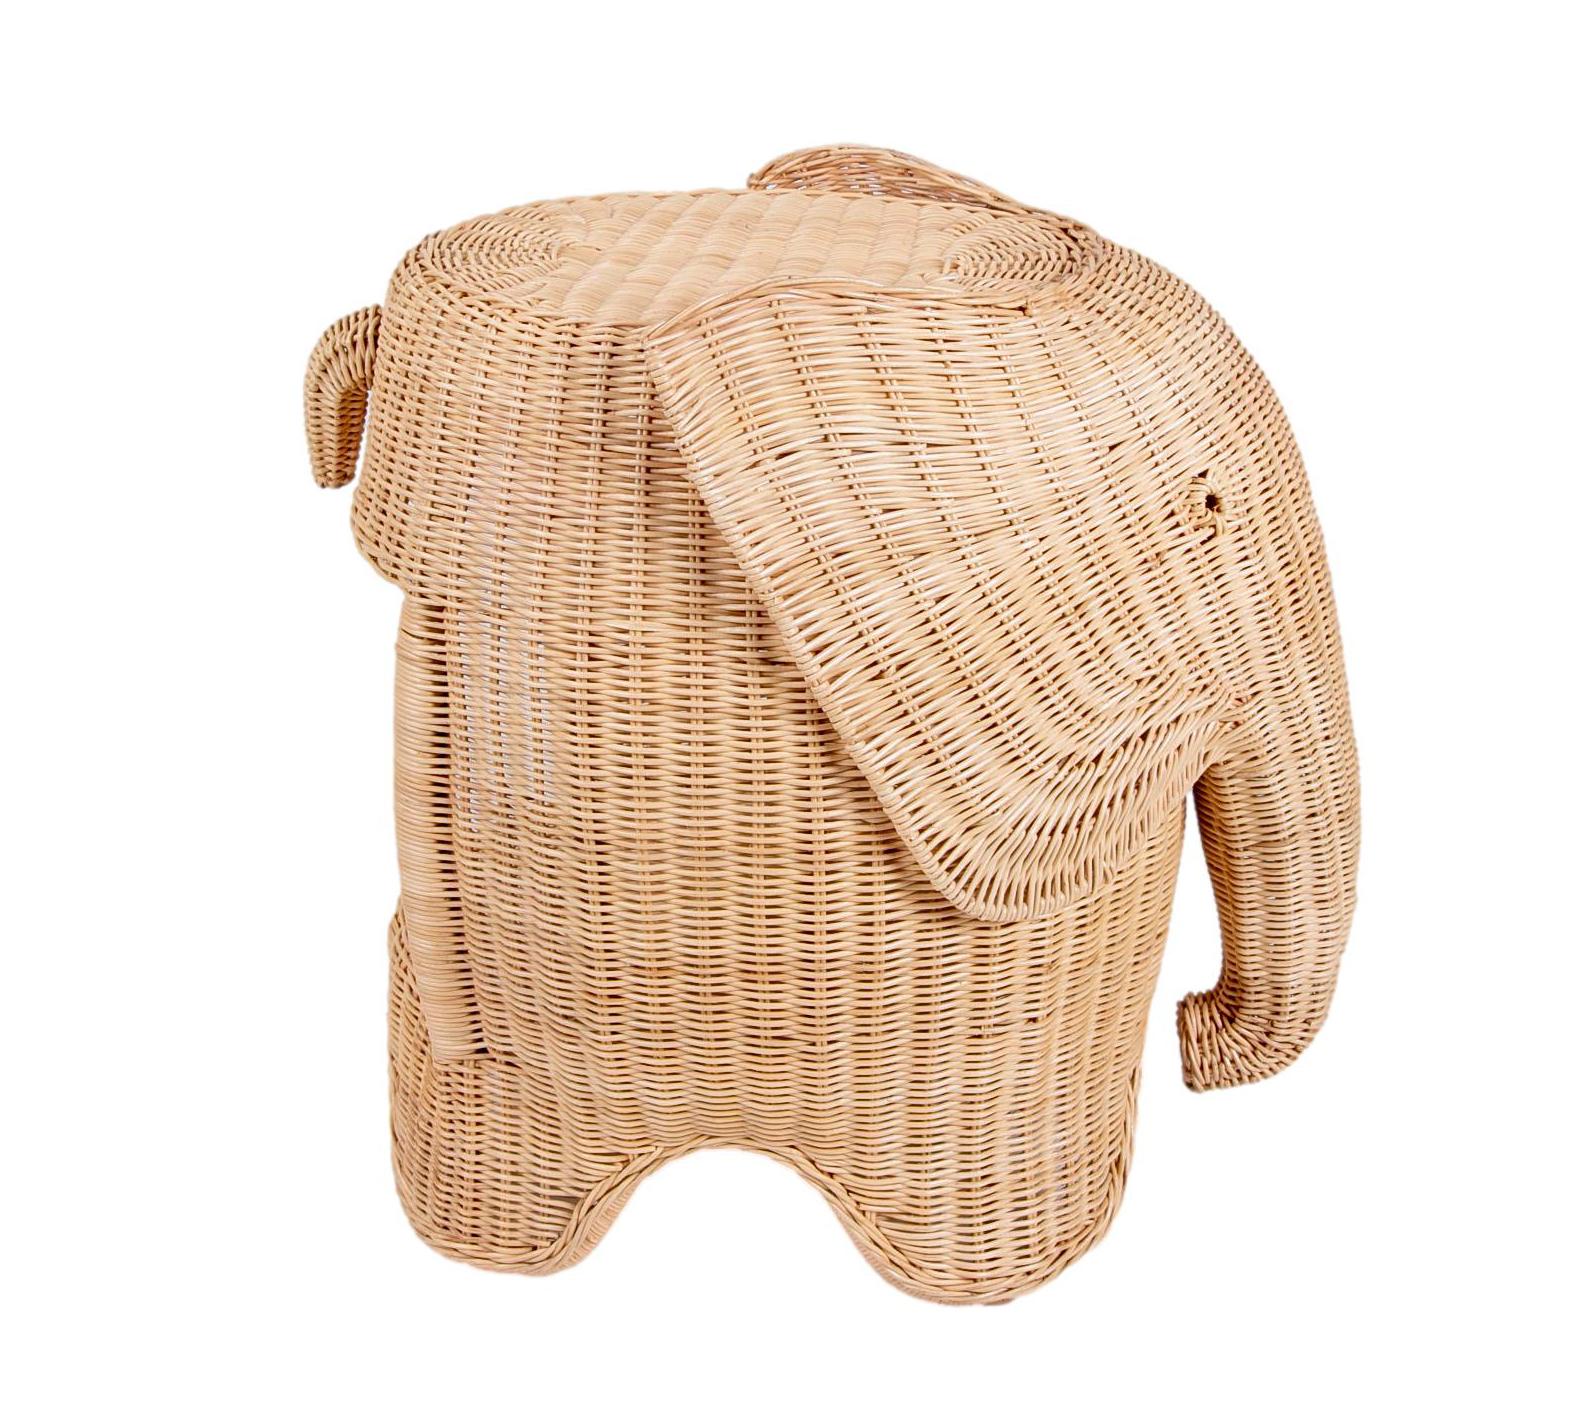 wicker elephant laundry basket